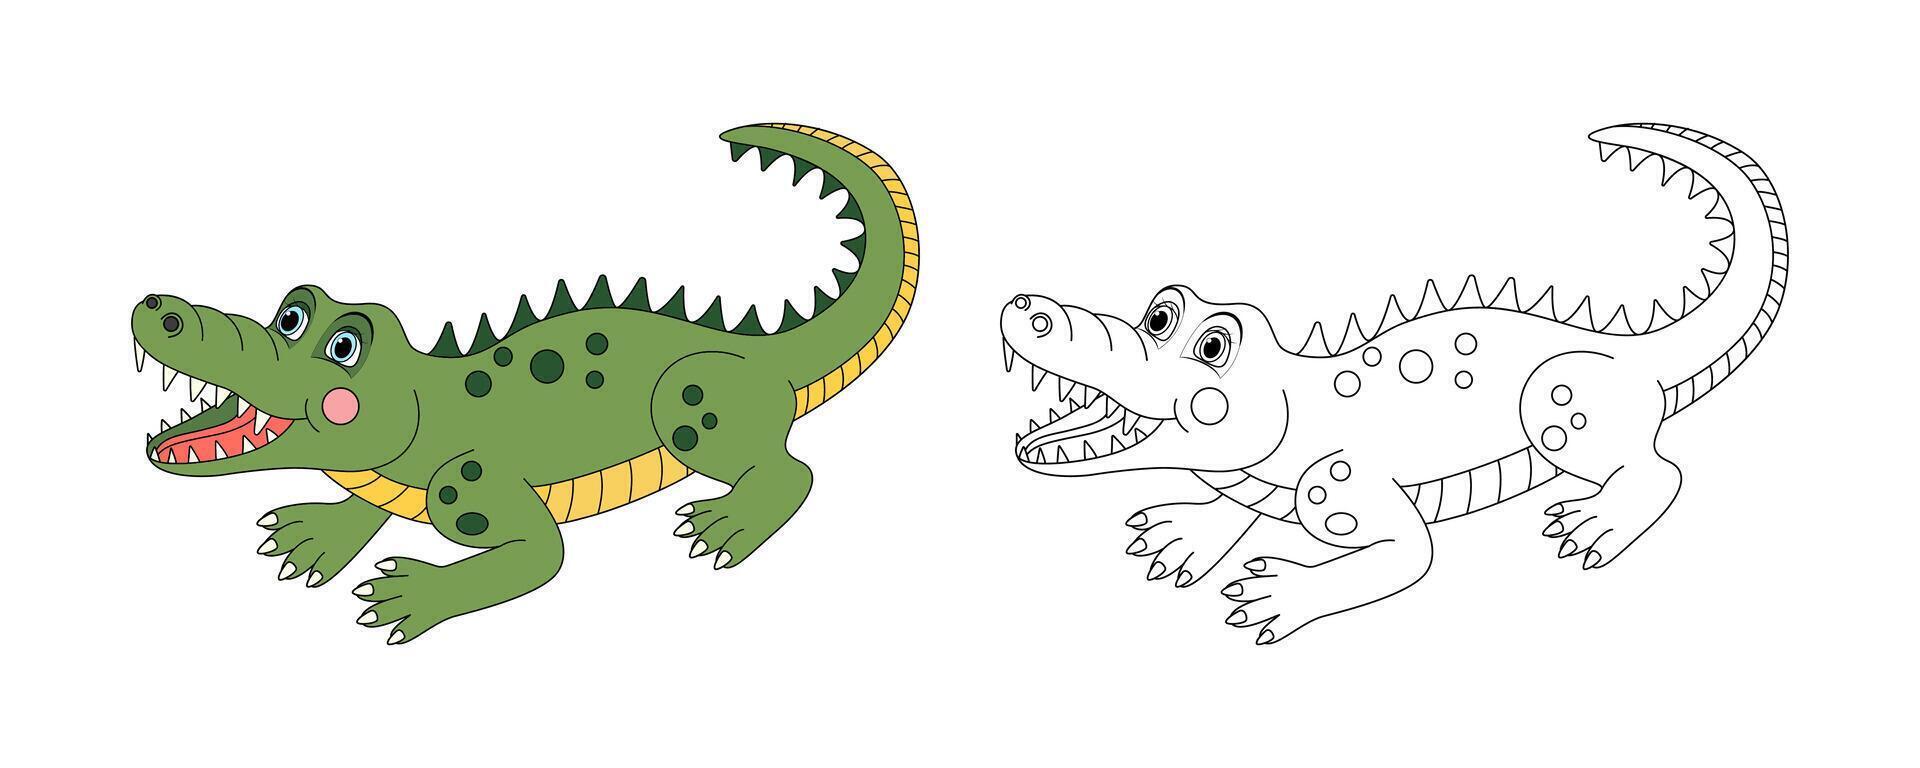 Alligator Linie und Farbe Illustration. Karikatur Vektor Illustration zum Färbung Buch.